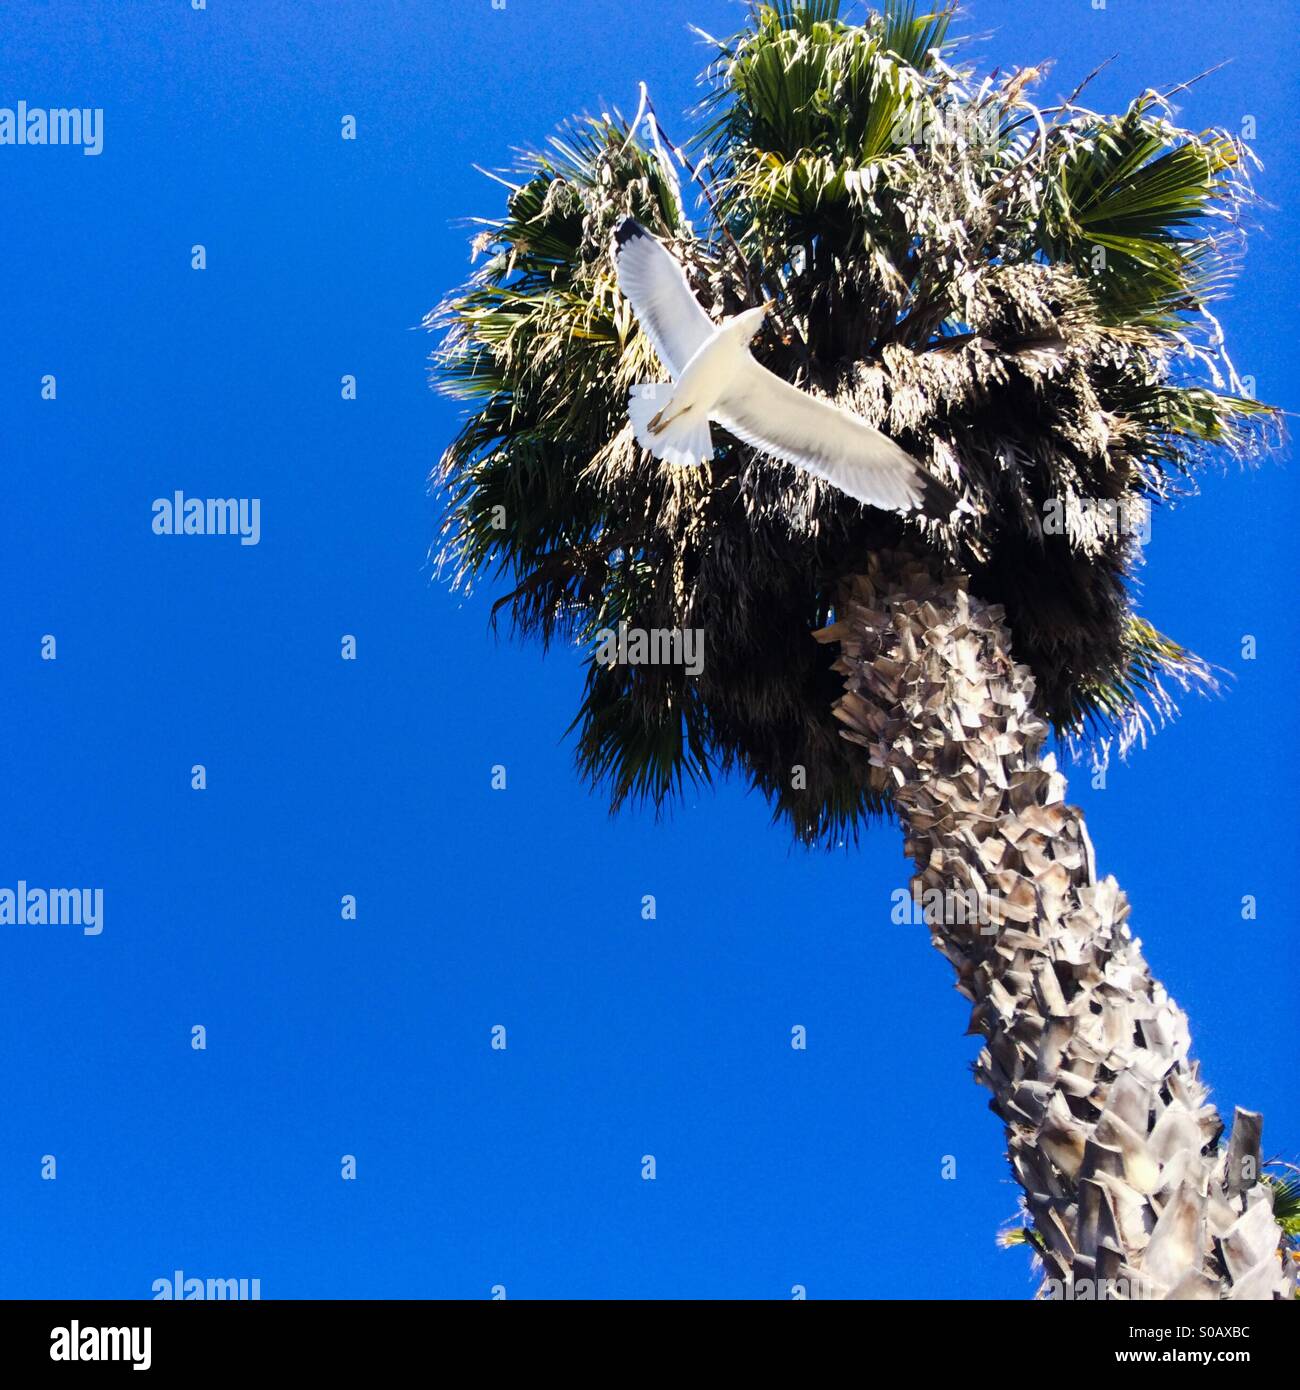 A seagull flies by a palm tree in Santa Barbara, California Stock Photo